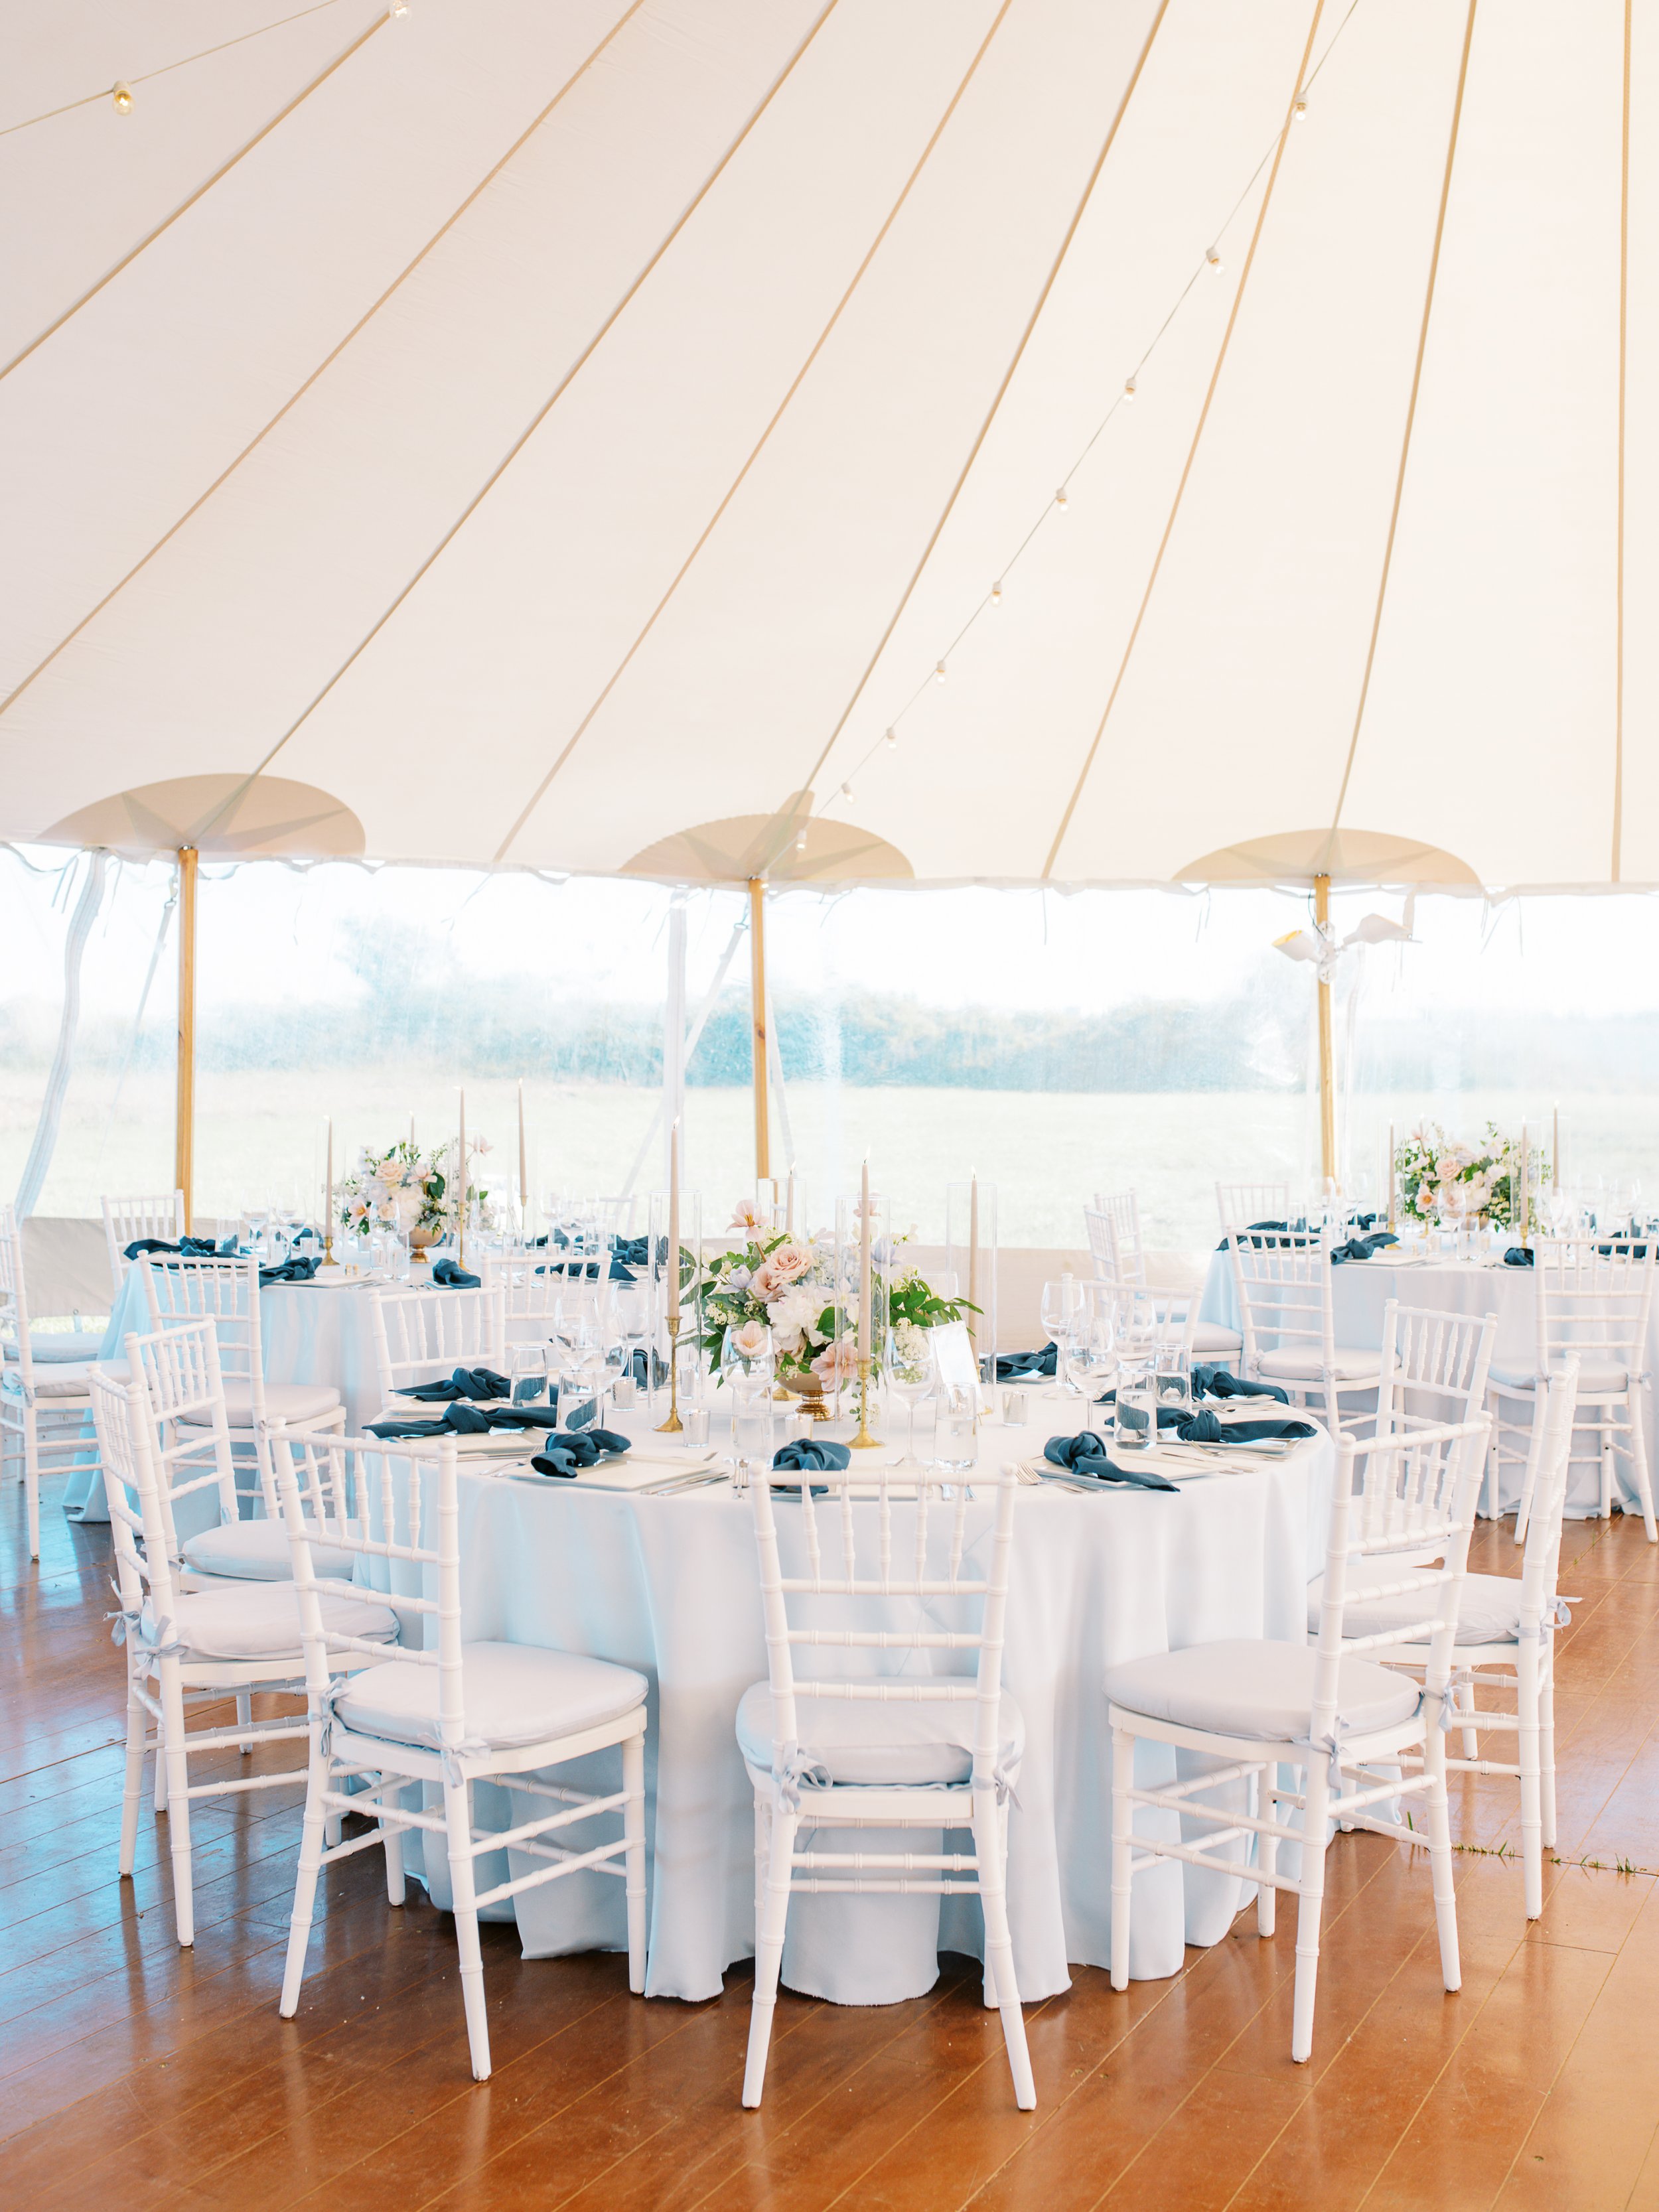 Round Tables inside Tented Wedding in Bridgehampton NY